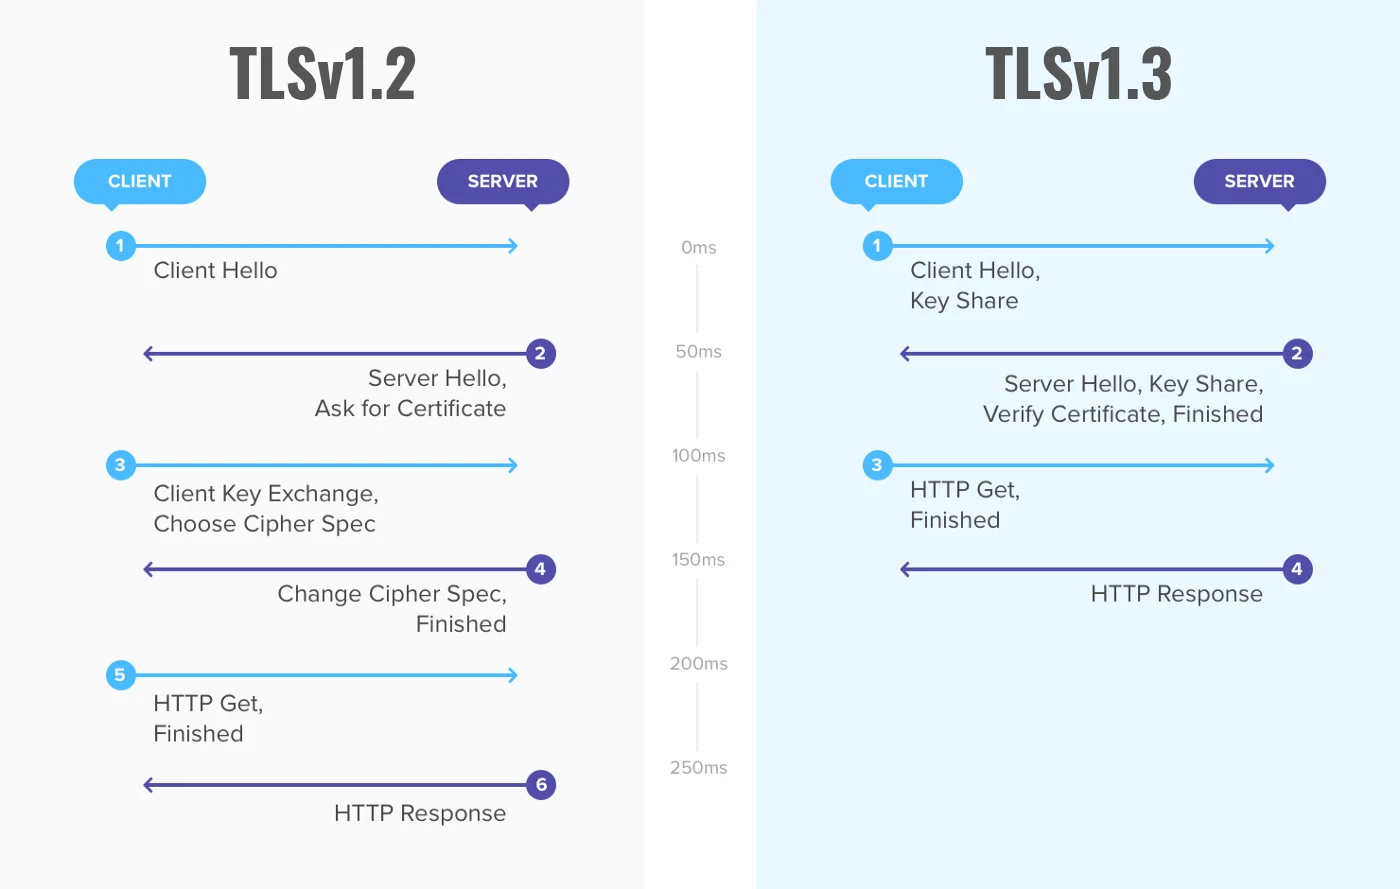 Perbedaan antara TLSv1.2 s TLSv1.3